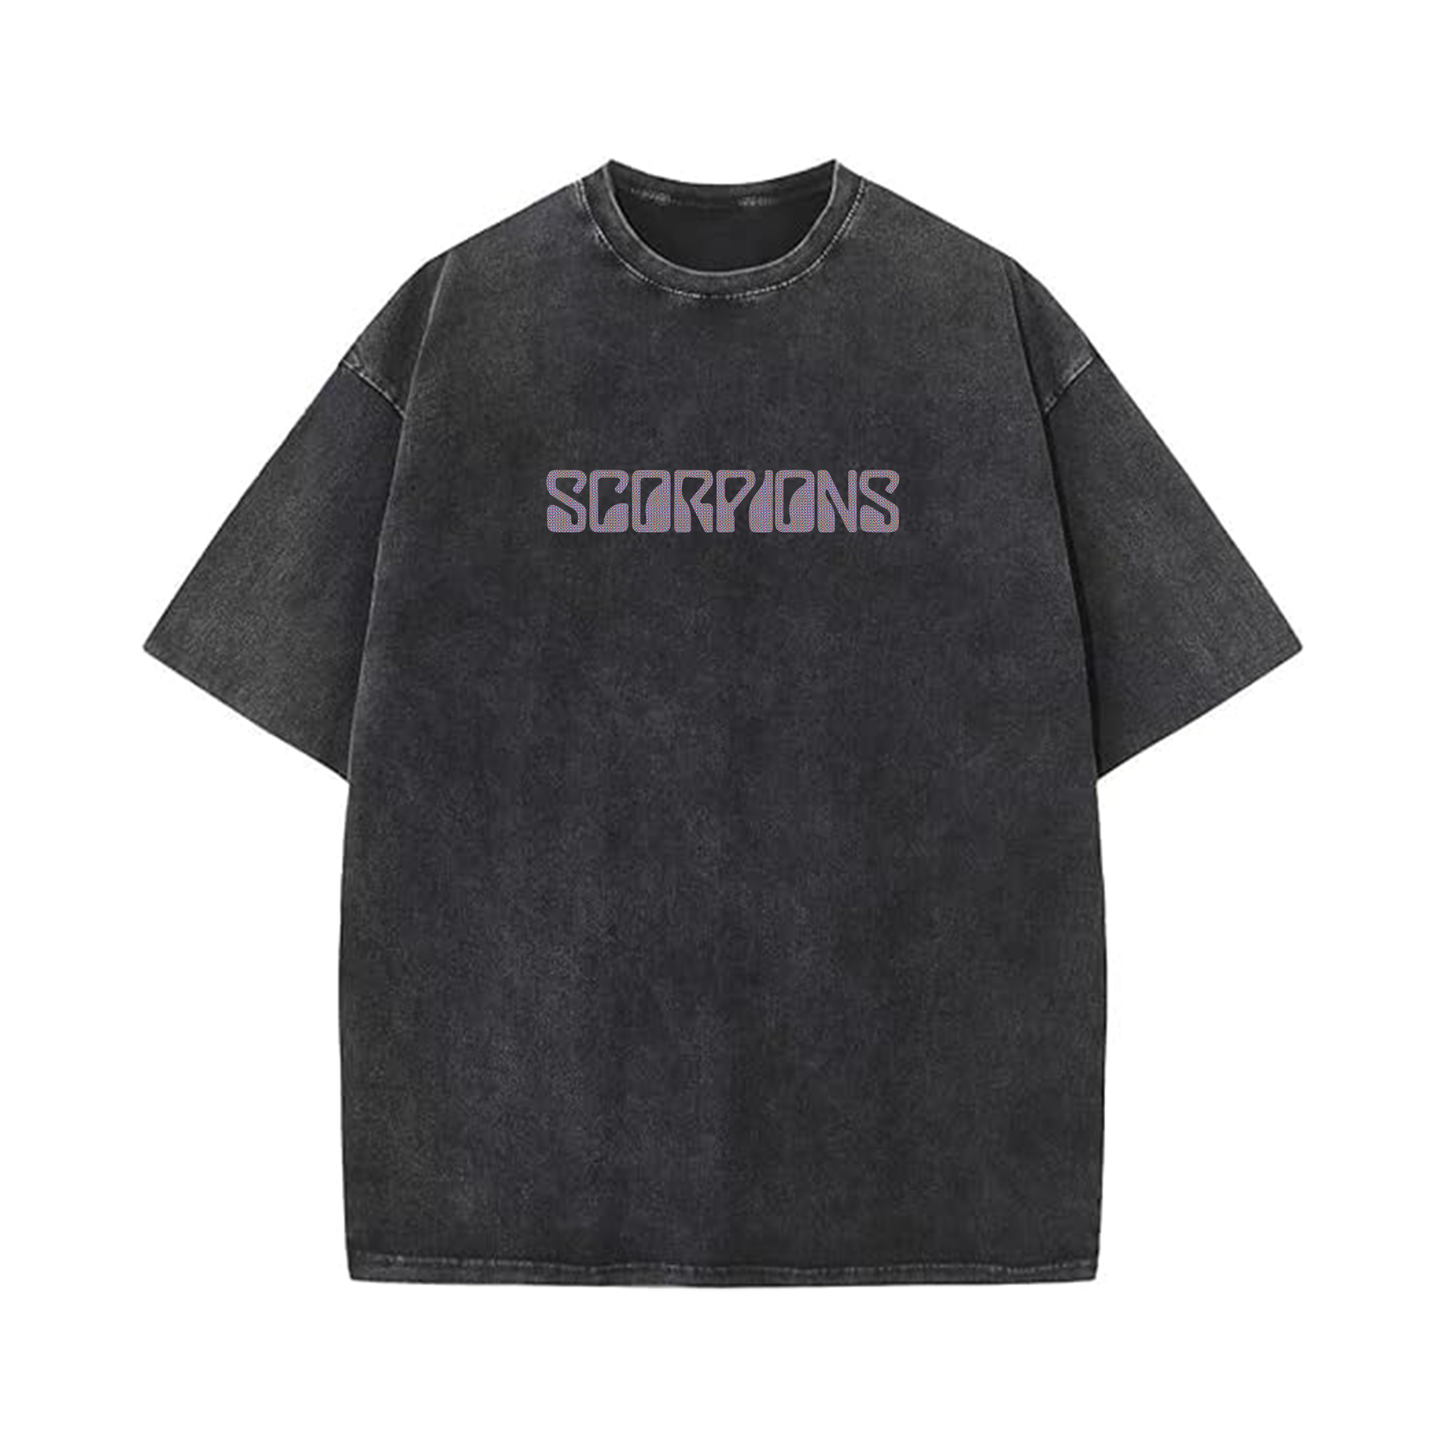 Scorpions Designed Vintage Oversized T-shirt